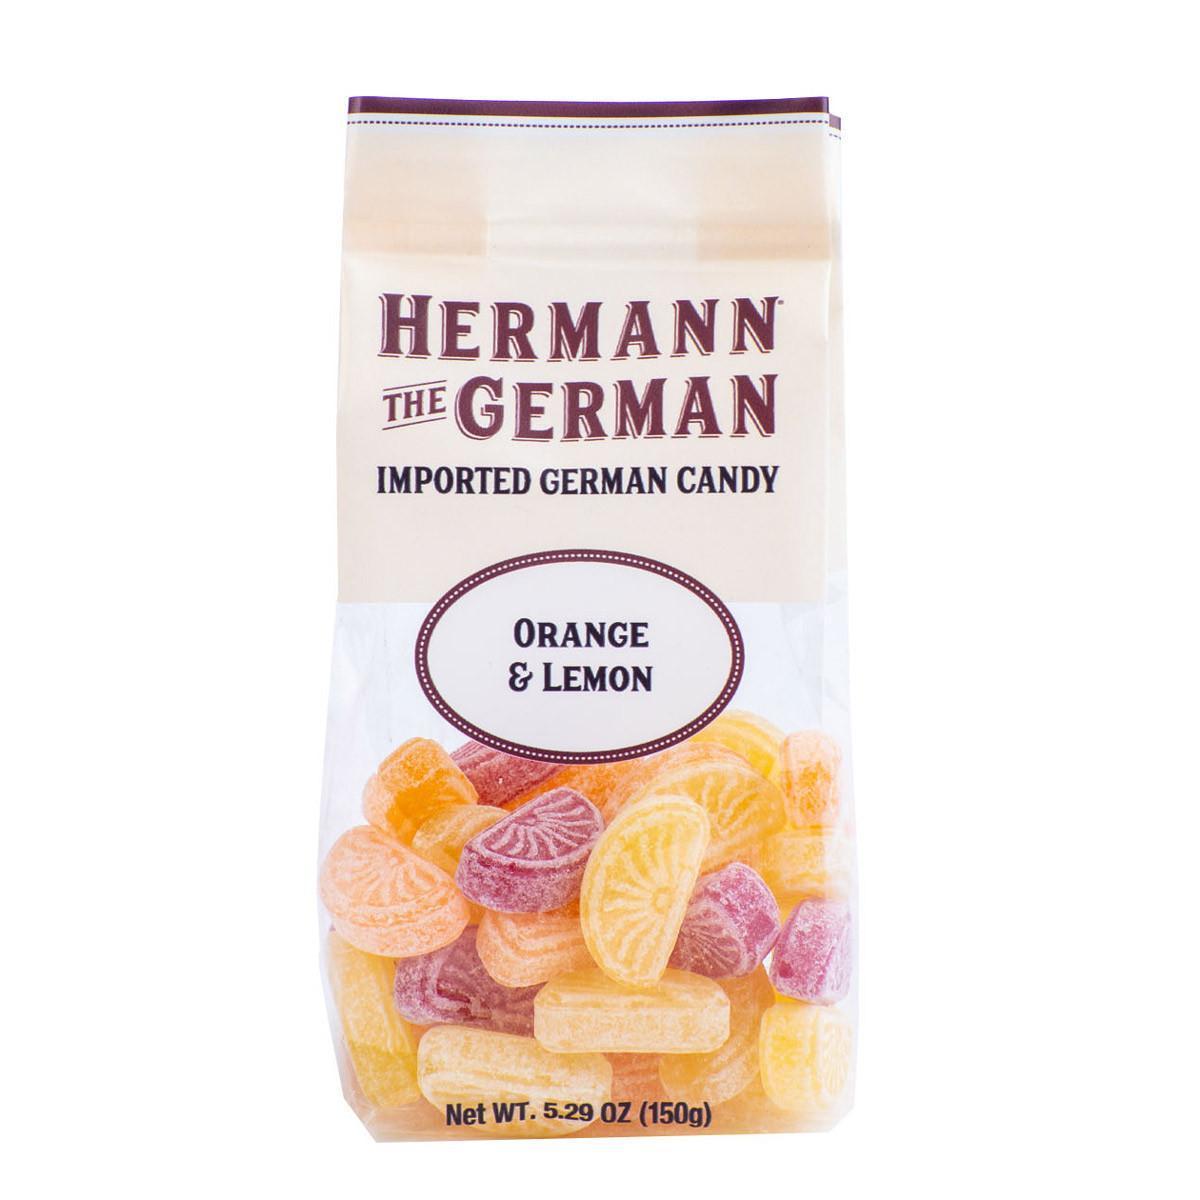 Hermann the German Orange & Lemon Candy